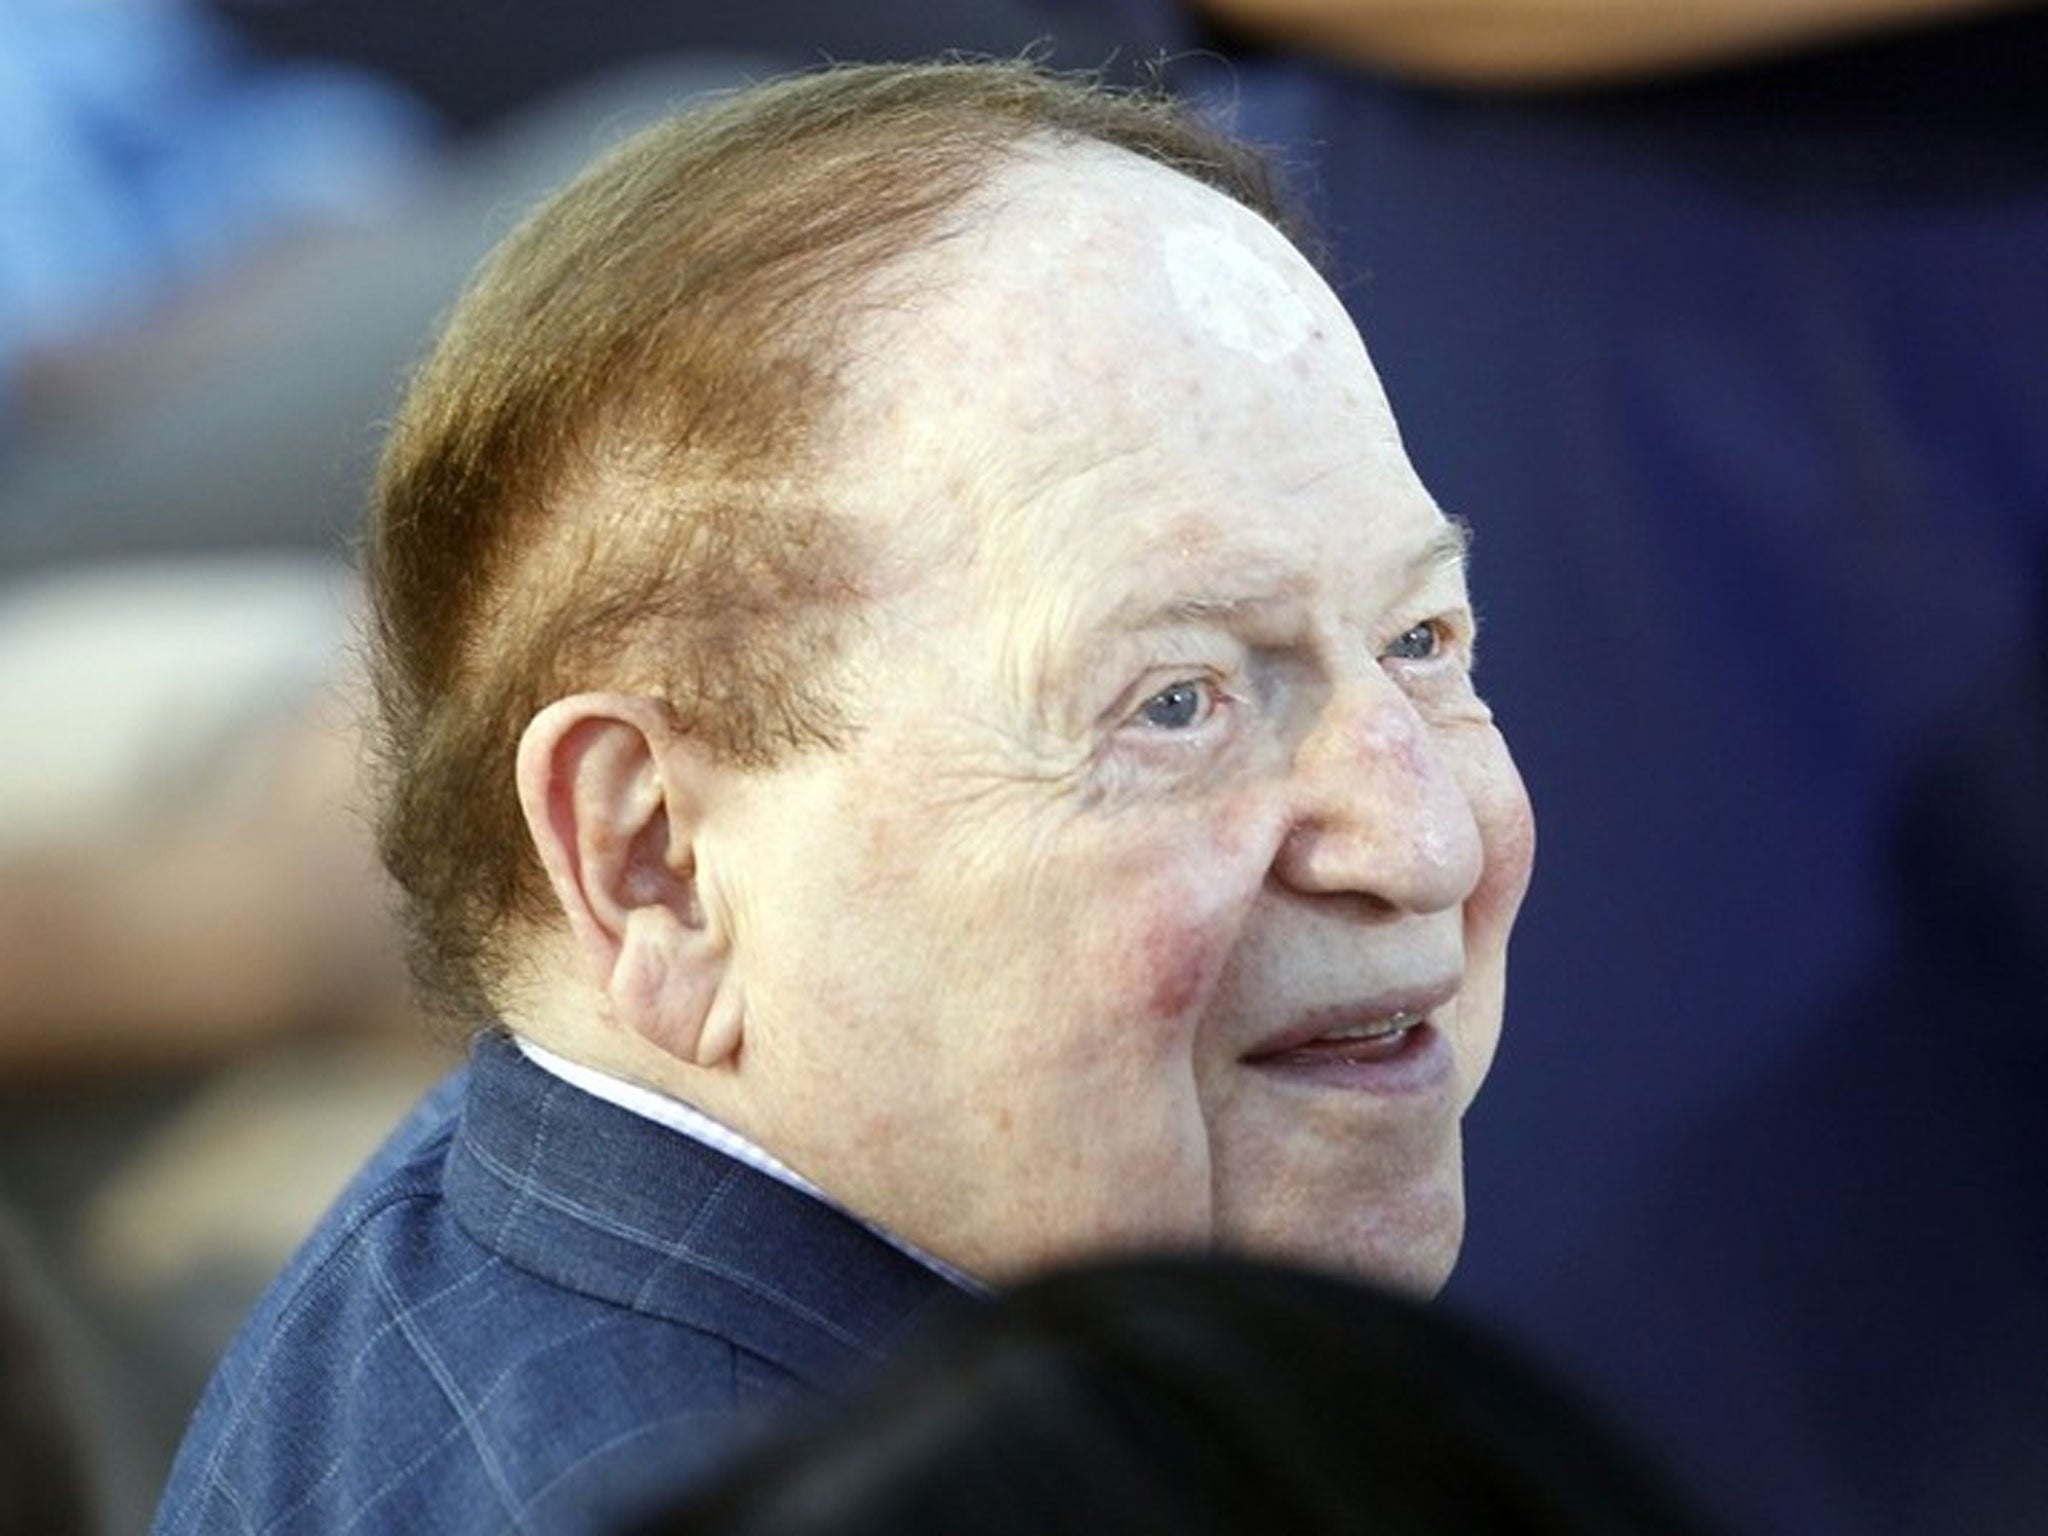 Gambling magnate Sheldon Adelson has a net worth of over billion